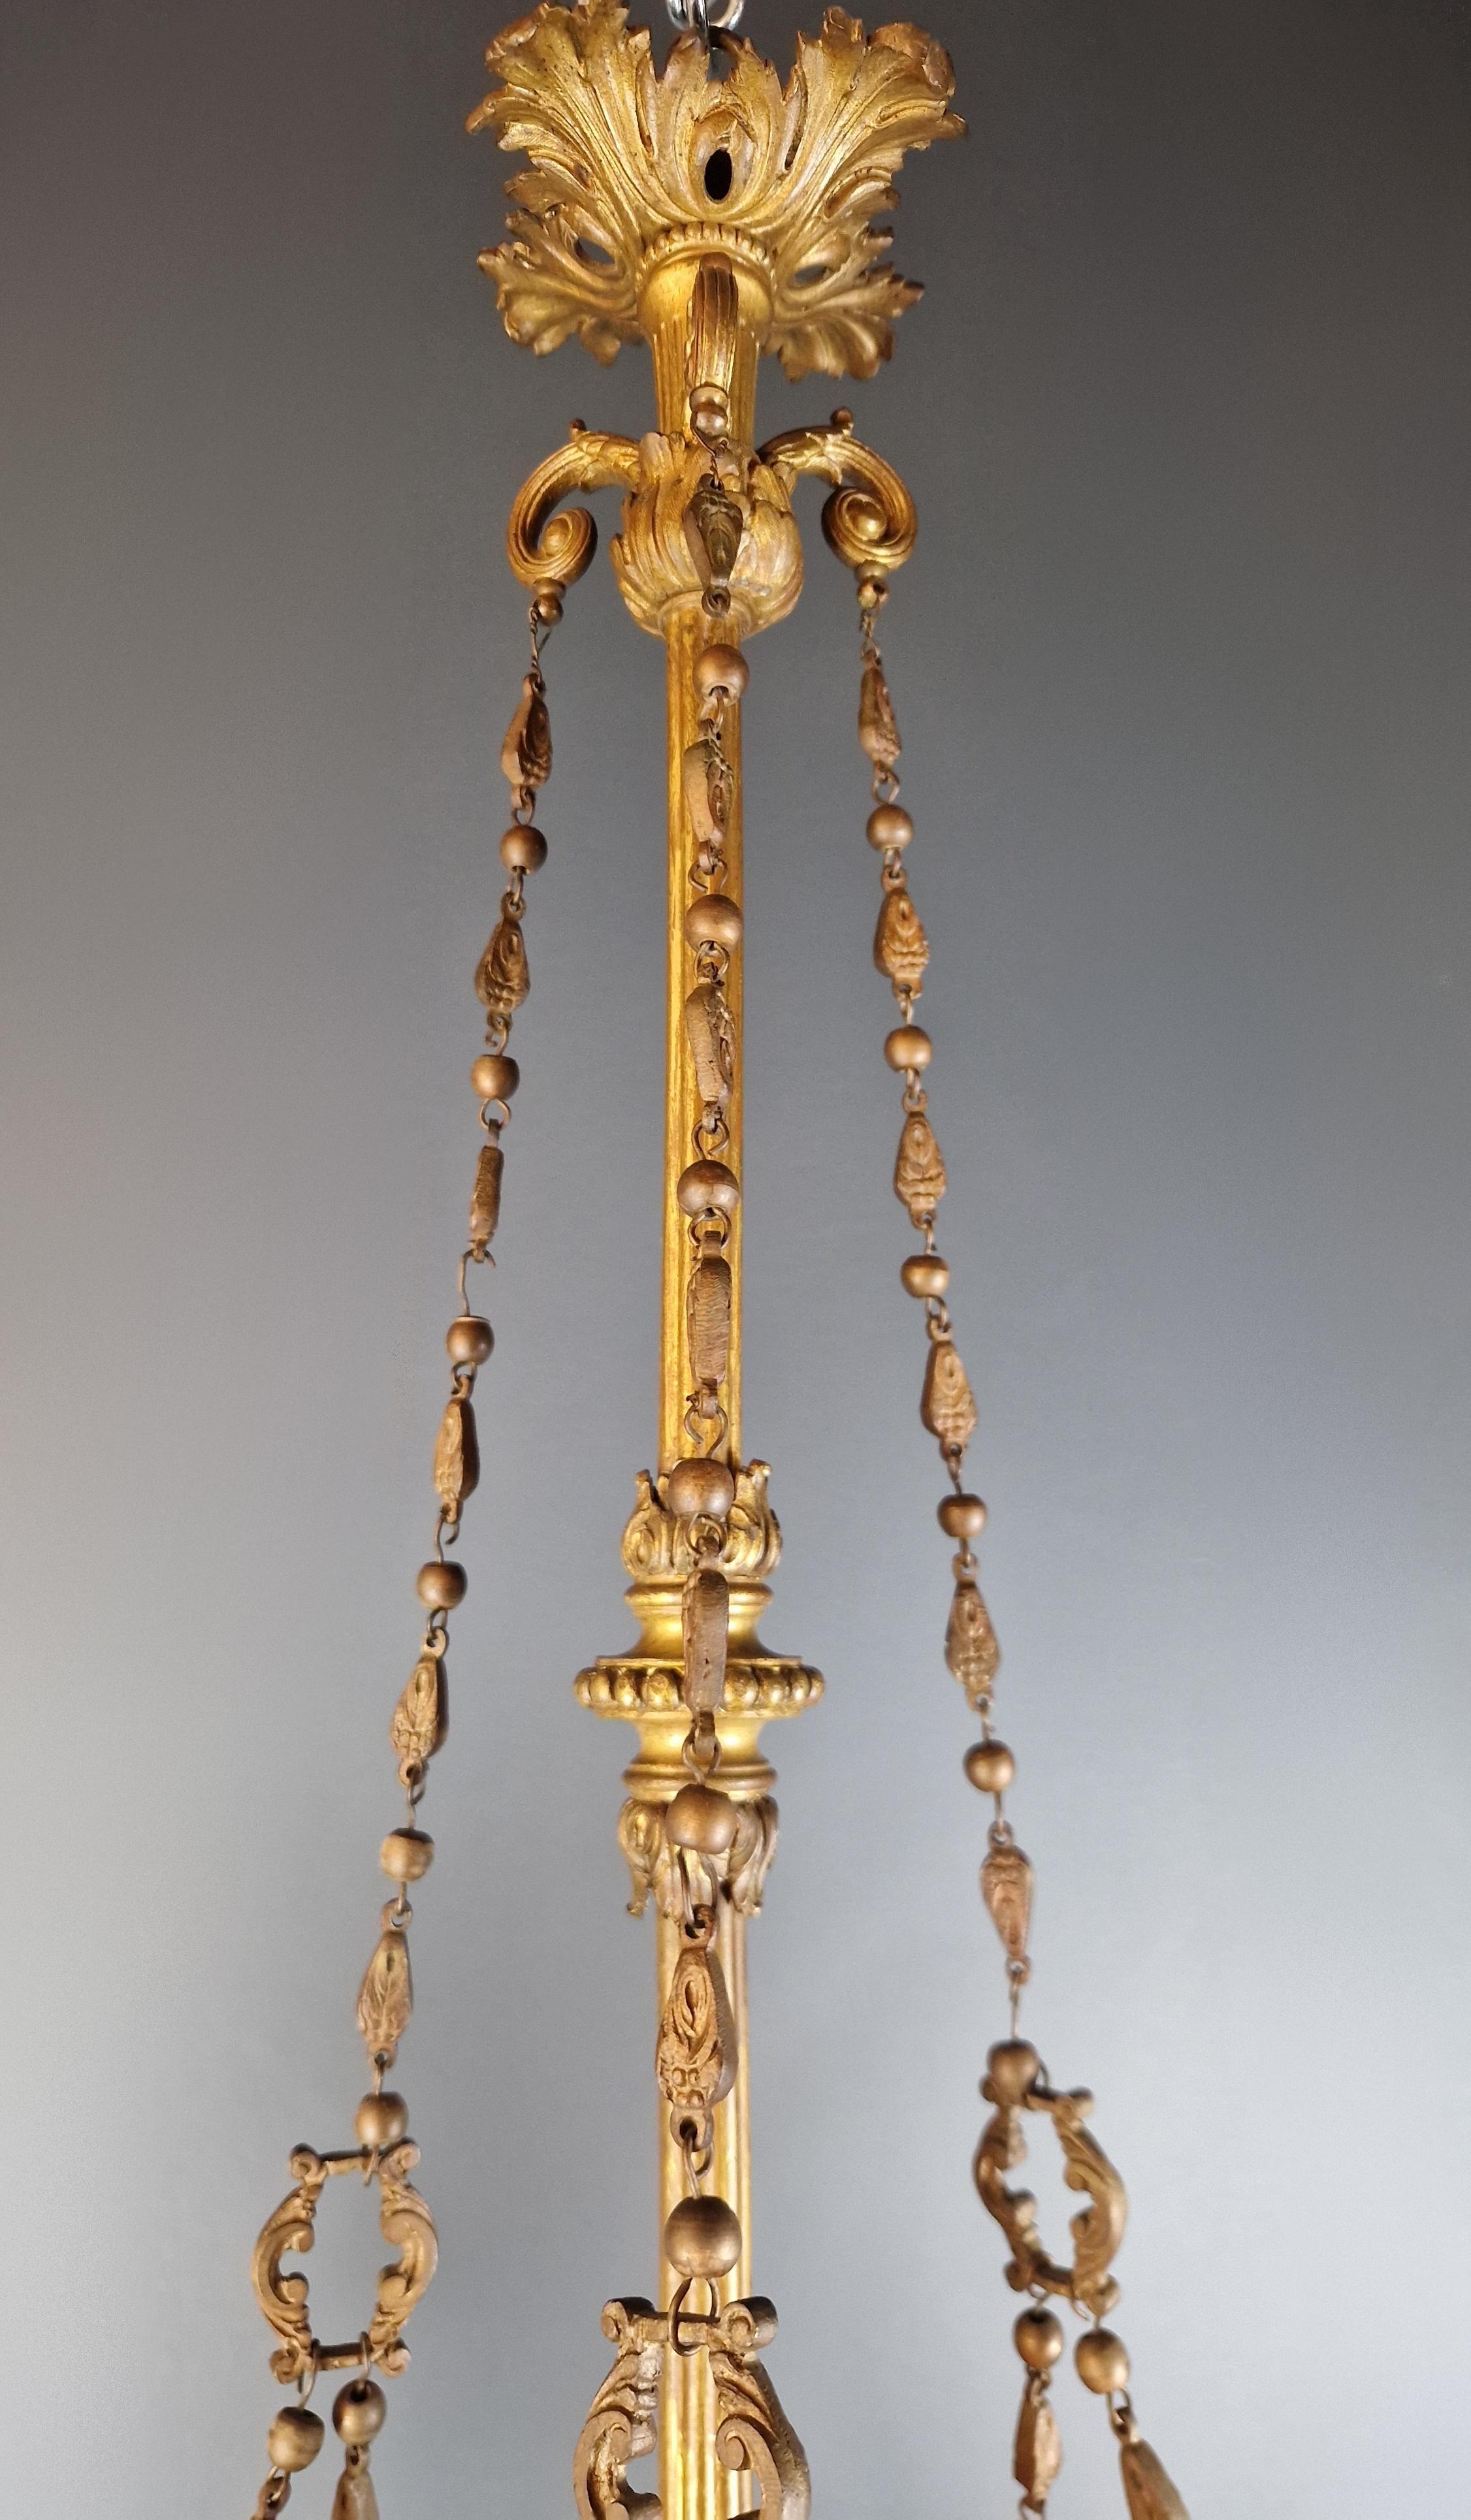 Wilhelminian style beads crystal chandelier flowers glass antique brass For Sale 3